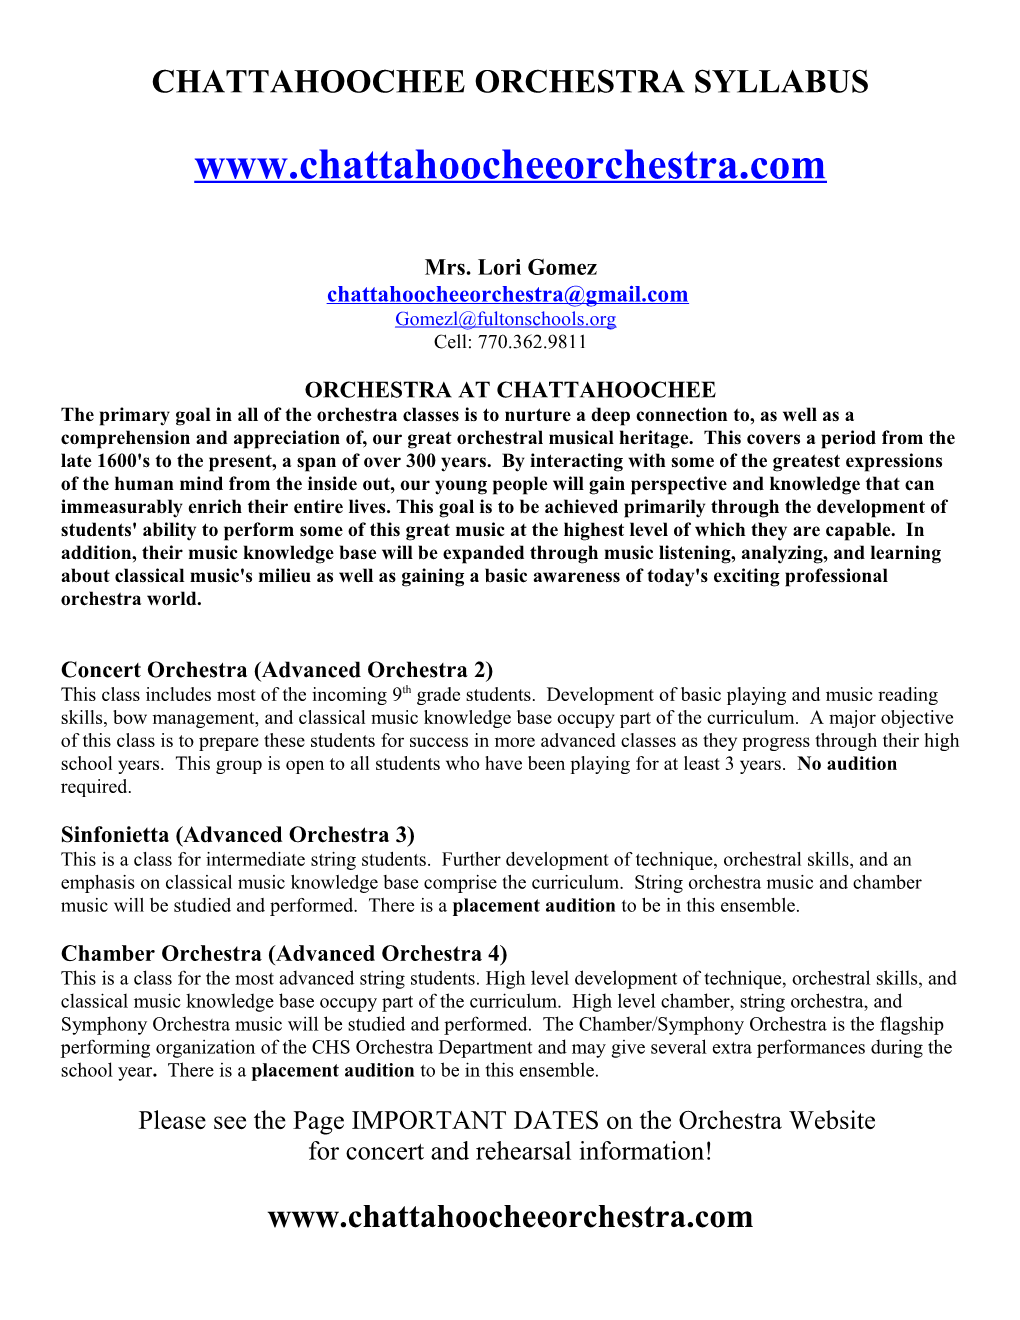 Chattahoochee Orchestrasyllabus